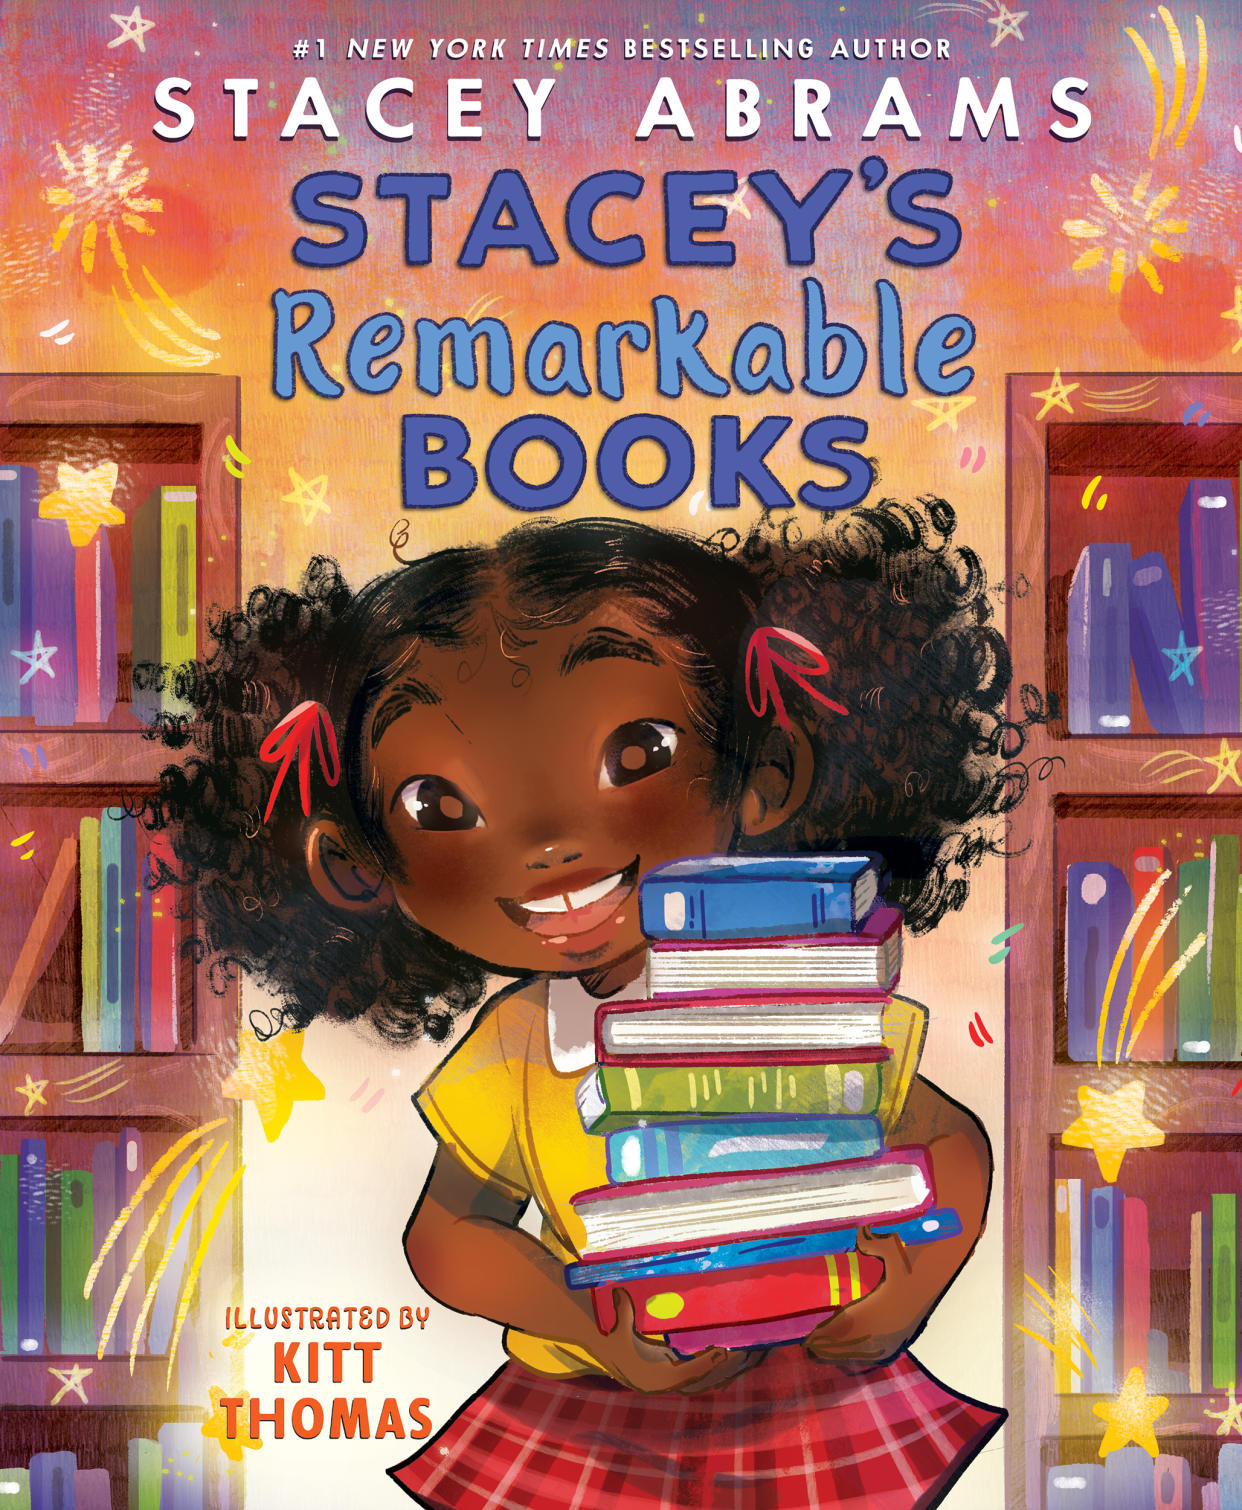 The cover of Stacey Abrams' new children's book. (Kitt Thomas / HarperCollins Children’s Books)